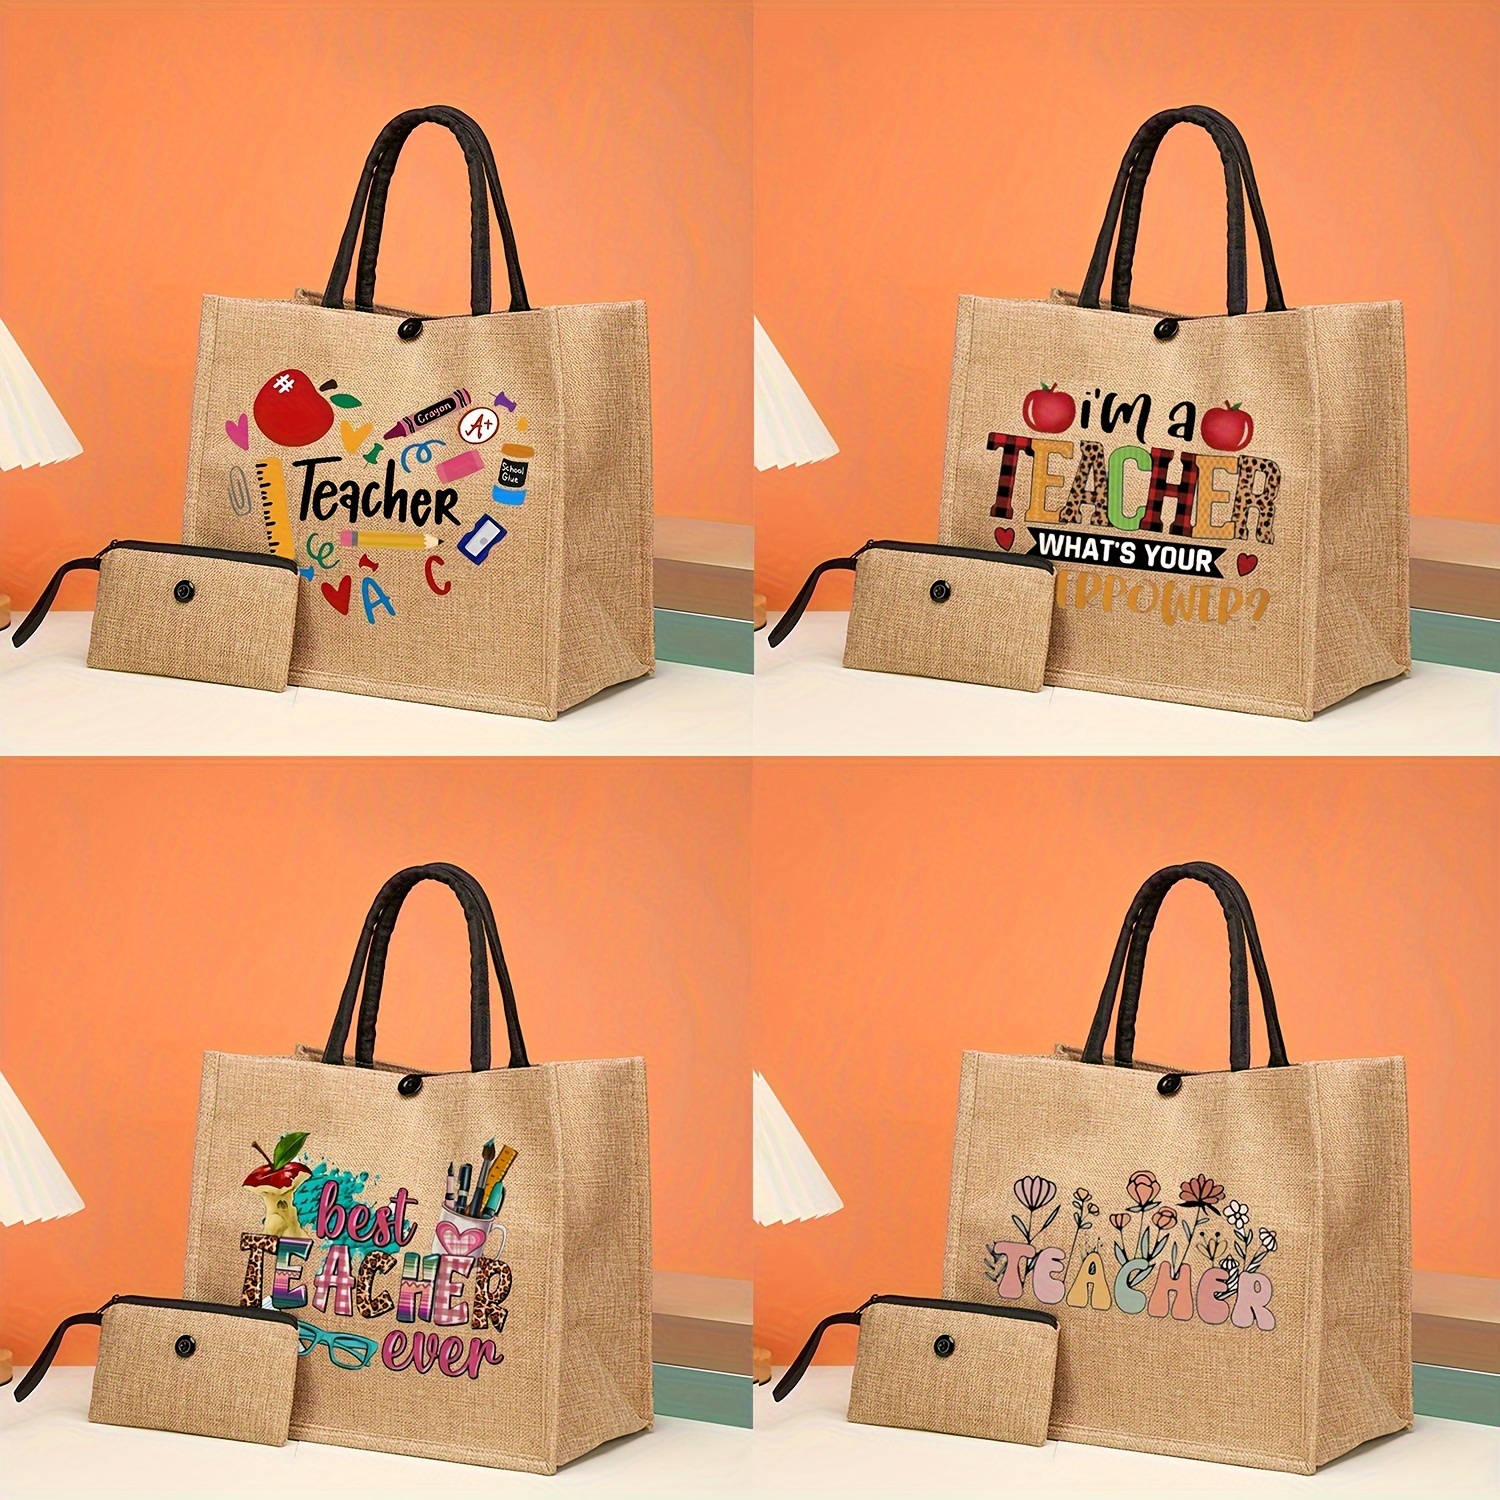 

Teacher Gift, 2pcs Cartoon Teachers Pattern Tote Bag Set, Lightweight Burlap Shopping Bag, Portable Travel Beach Bag With Makeup Bag